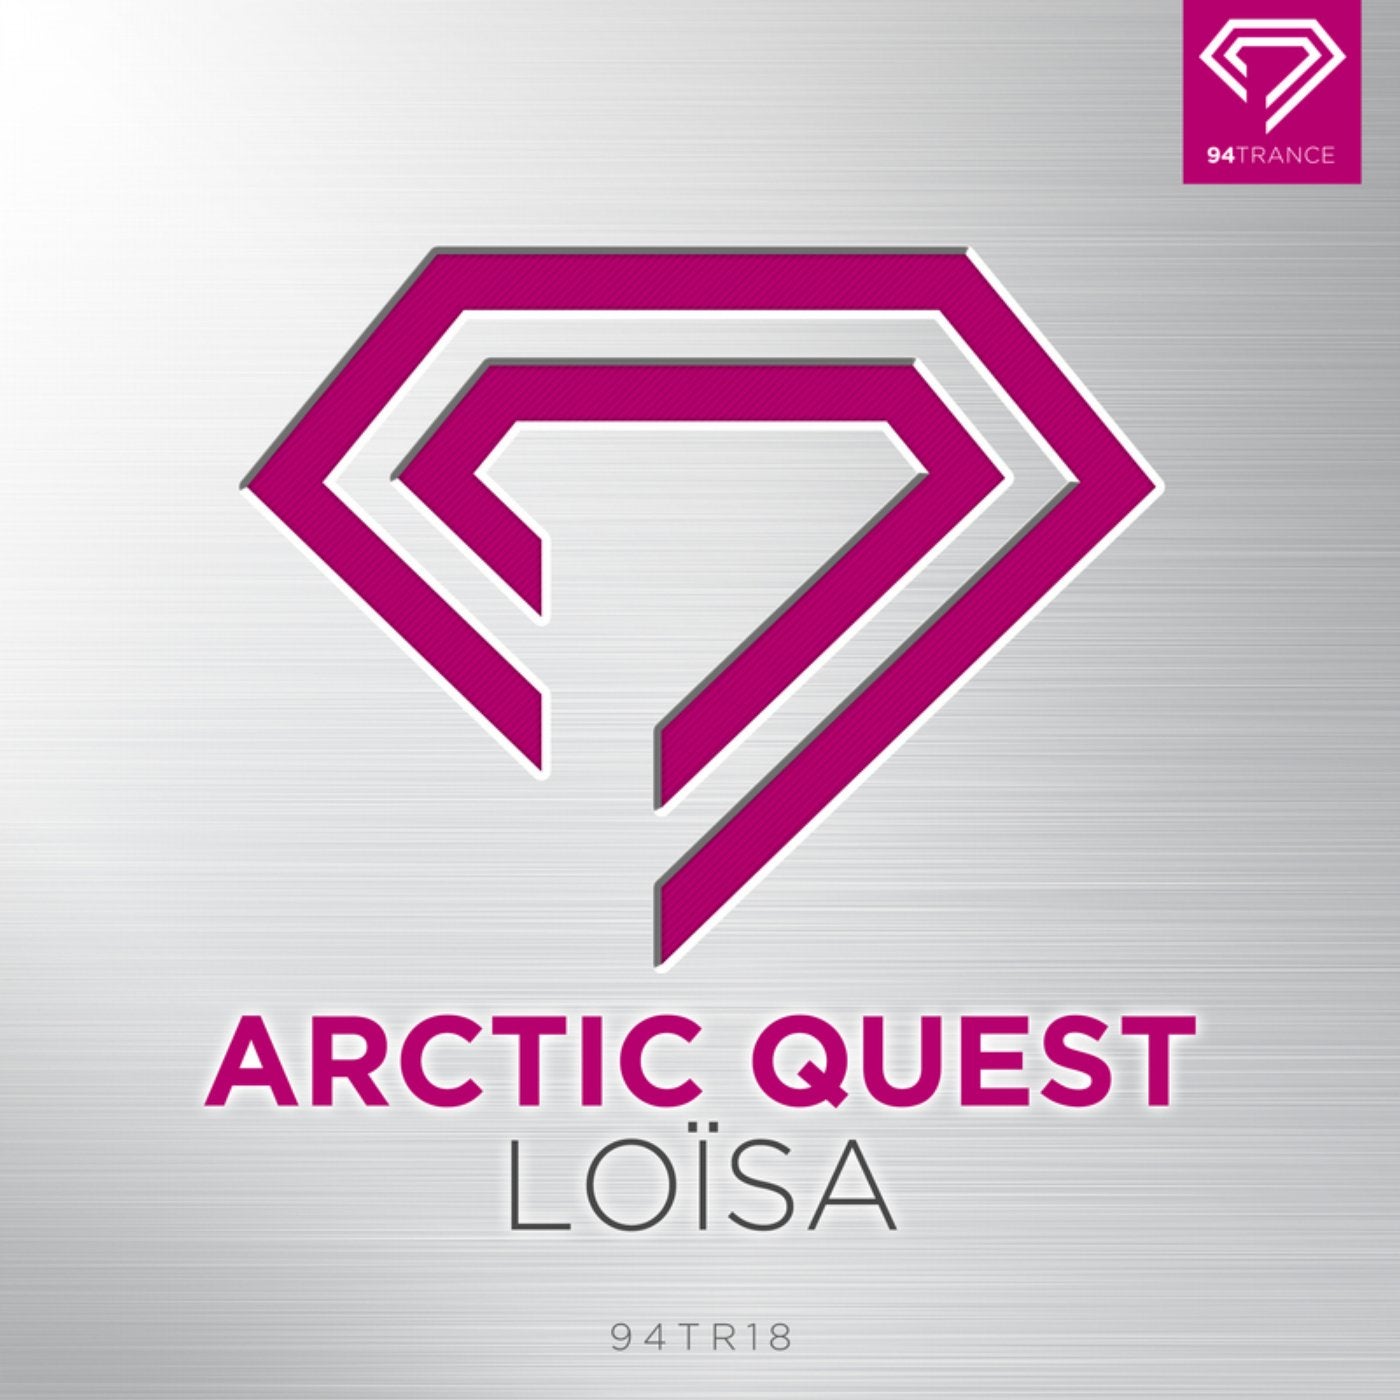 Arctic Quest Music & Downloads on Beatport